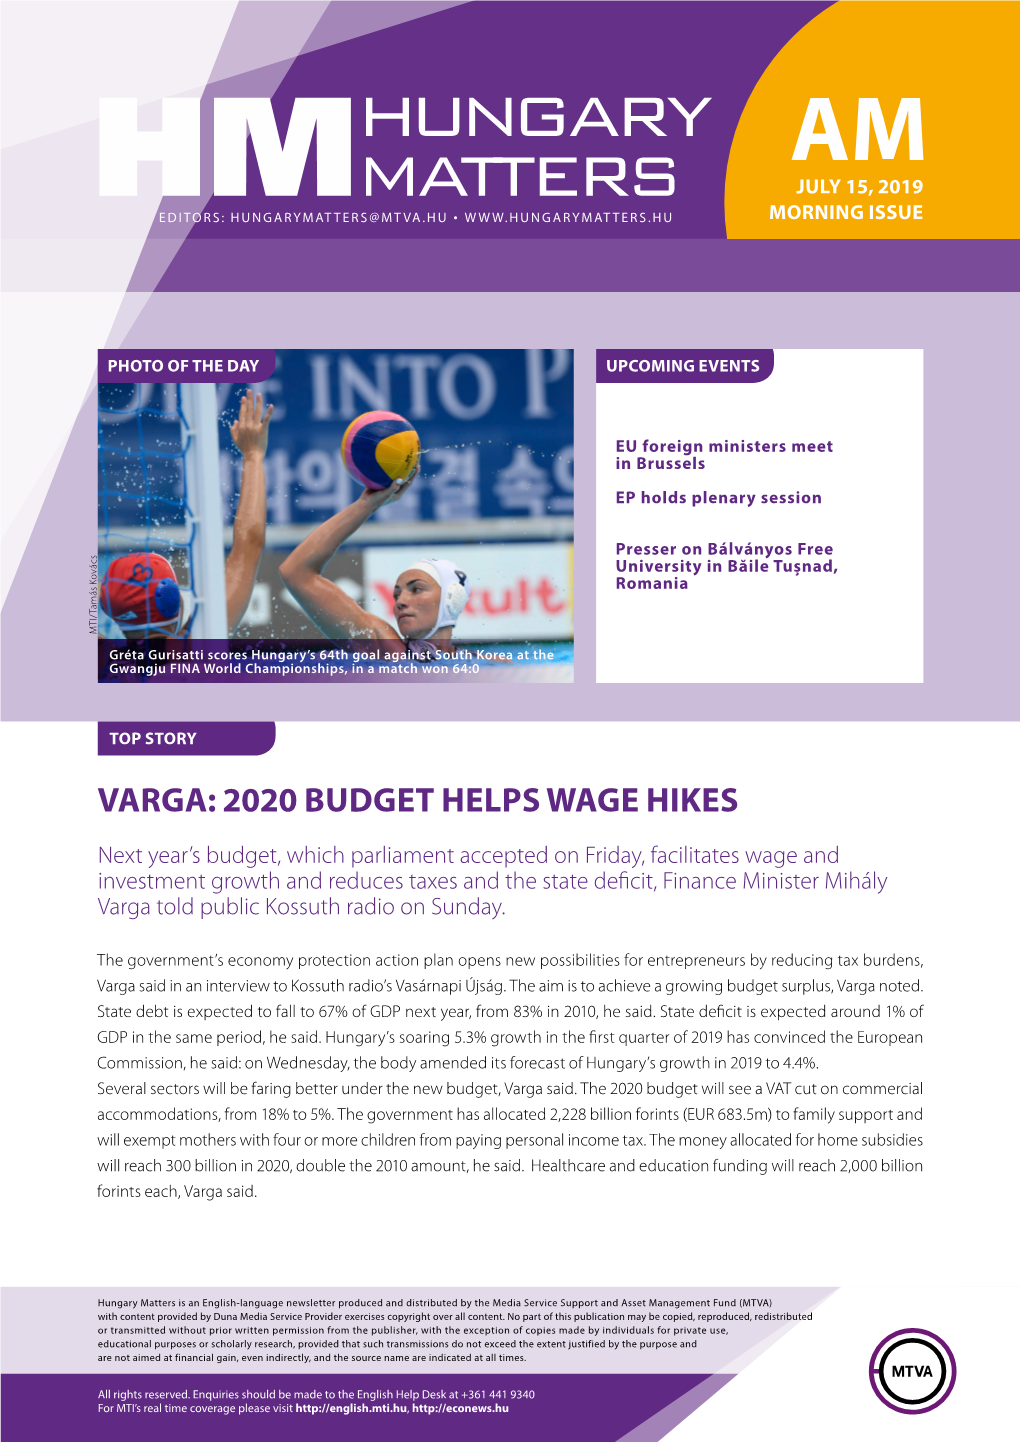 Varga: 2020 Budget Helps Wage Hikes